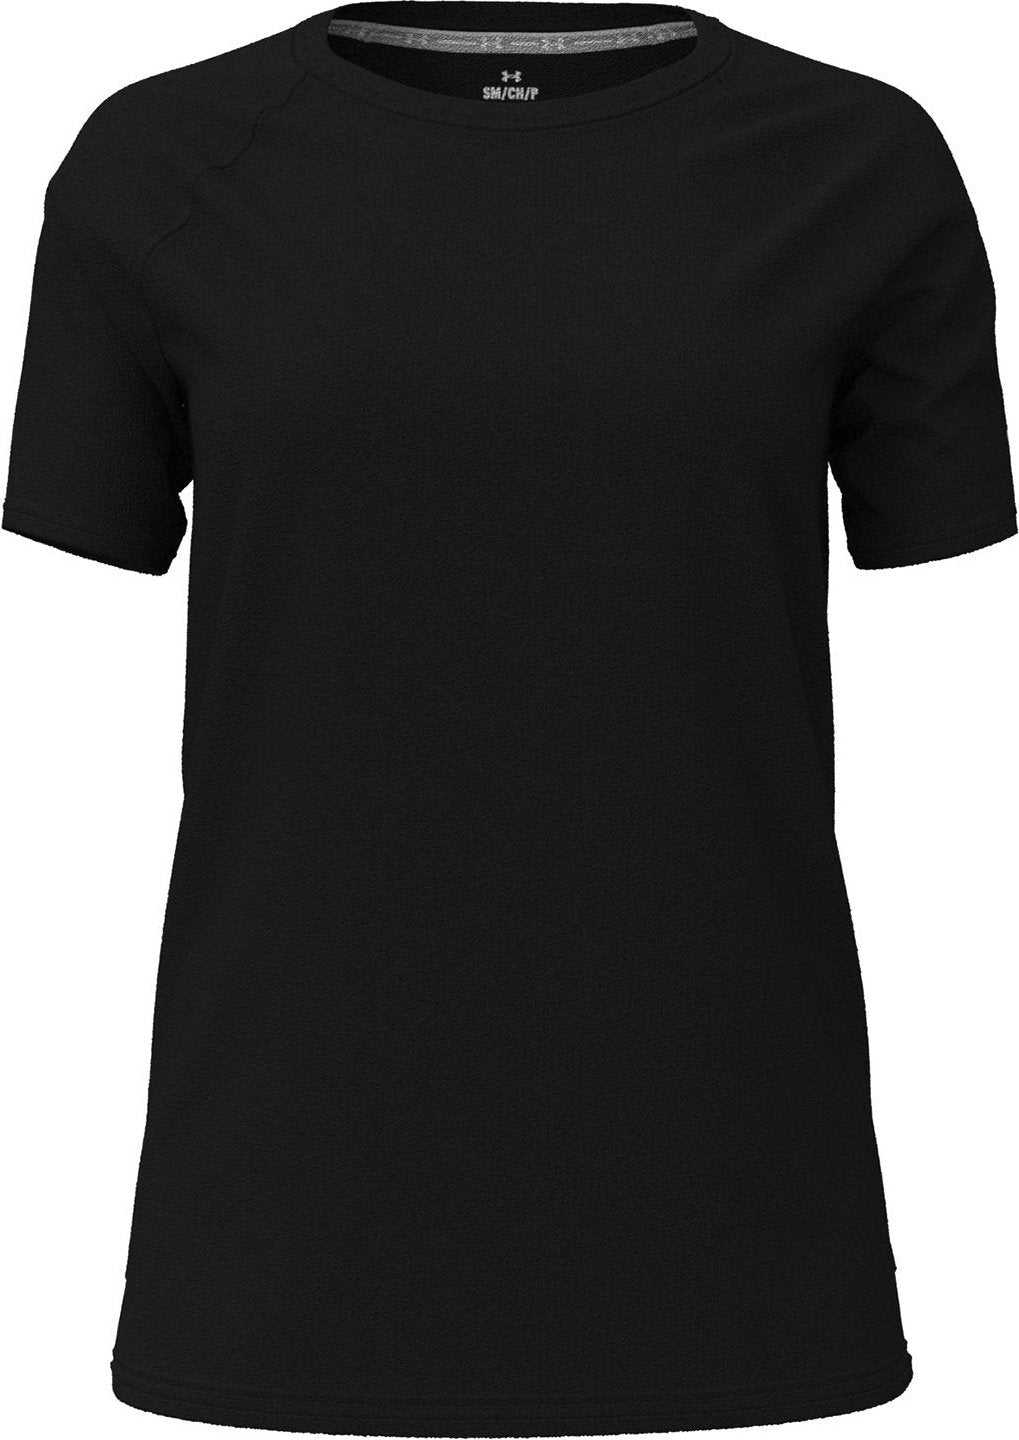 Under Armour 1376903 Ladies Athletics T-Shirt - Black White